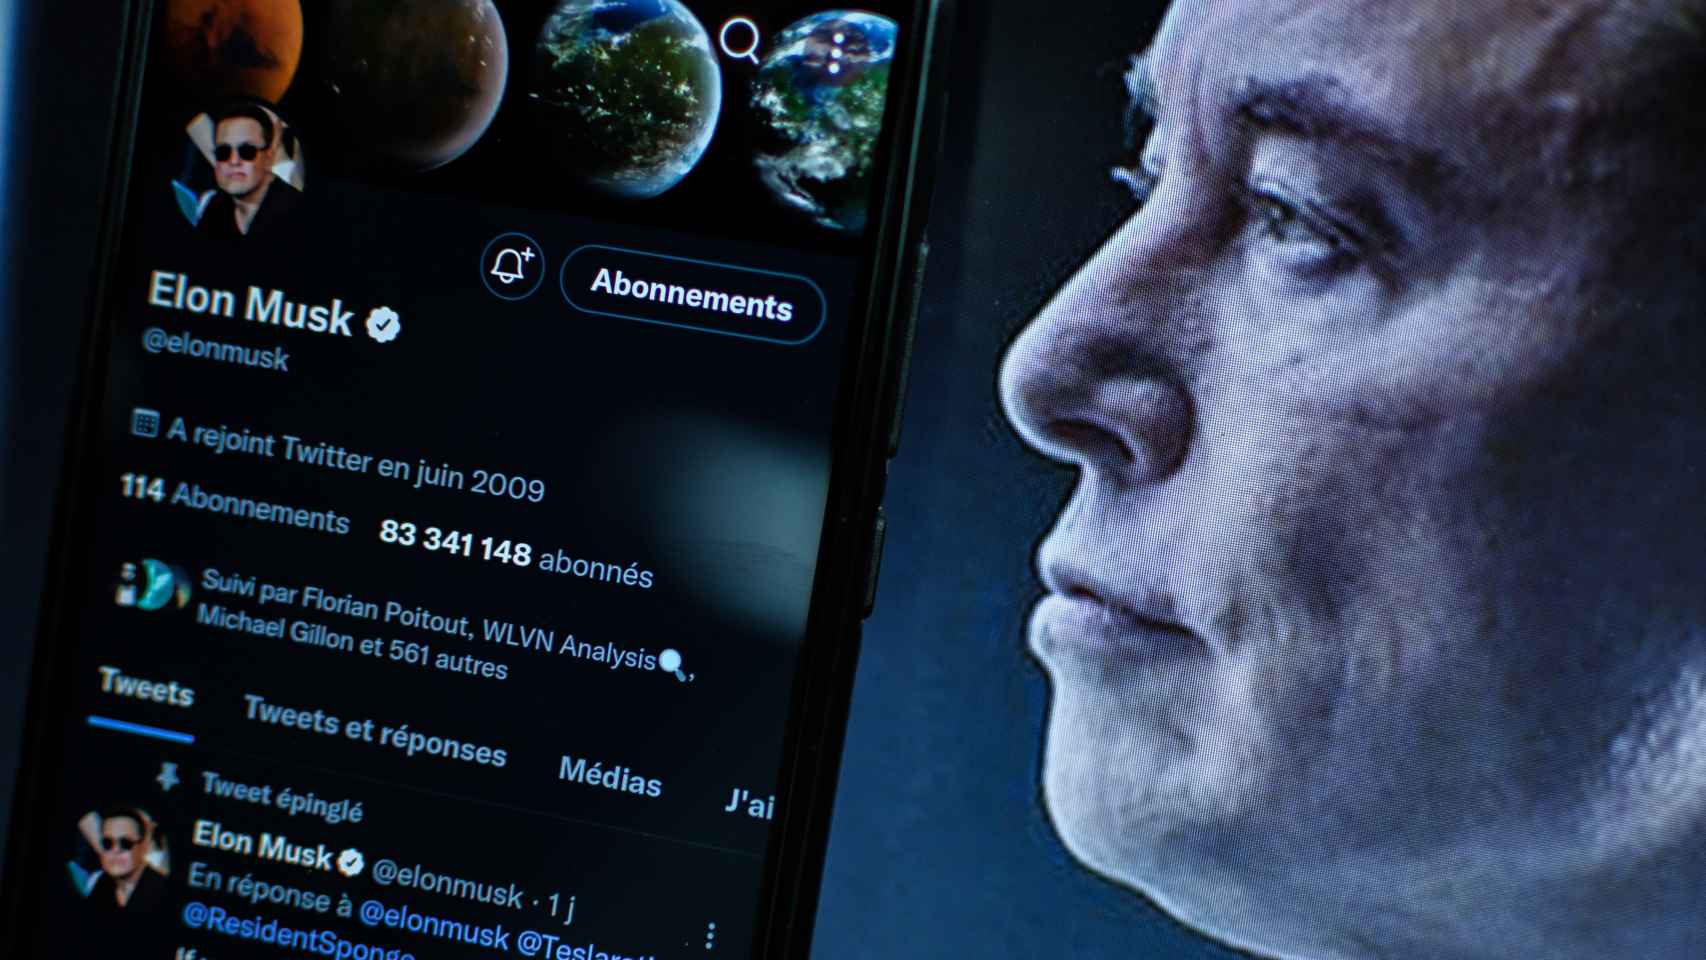 Vista del rostro de Elon Musk frente a un ordenador con un pantallazo de Twitter